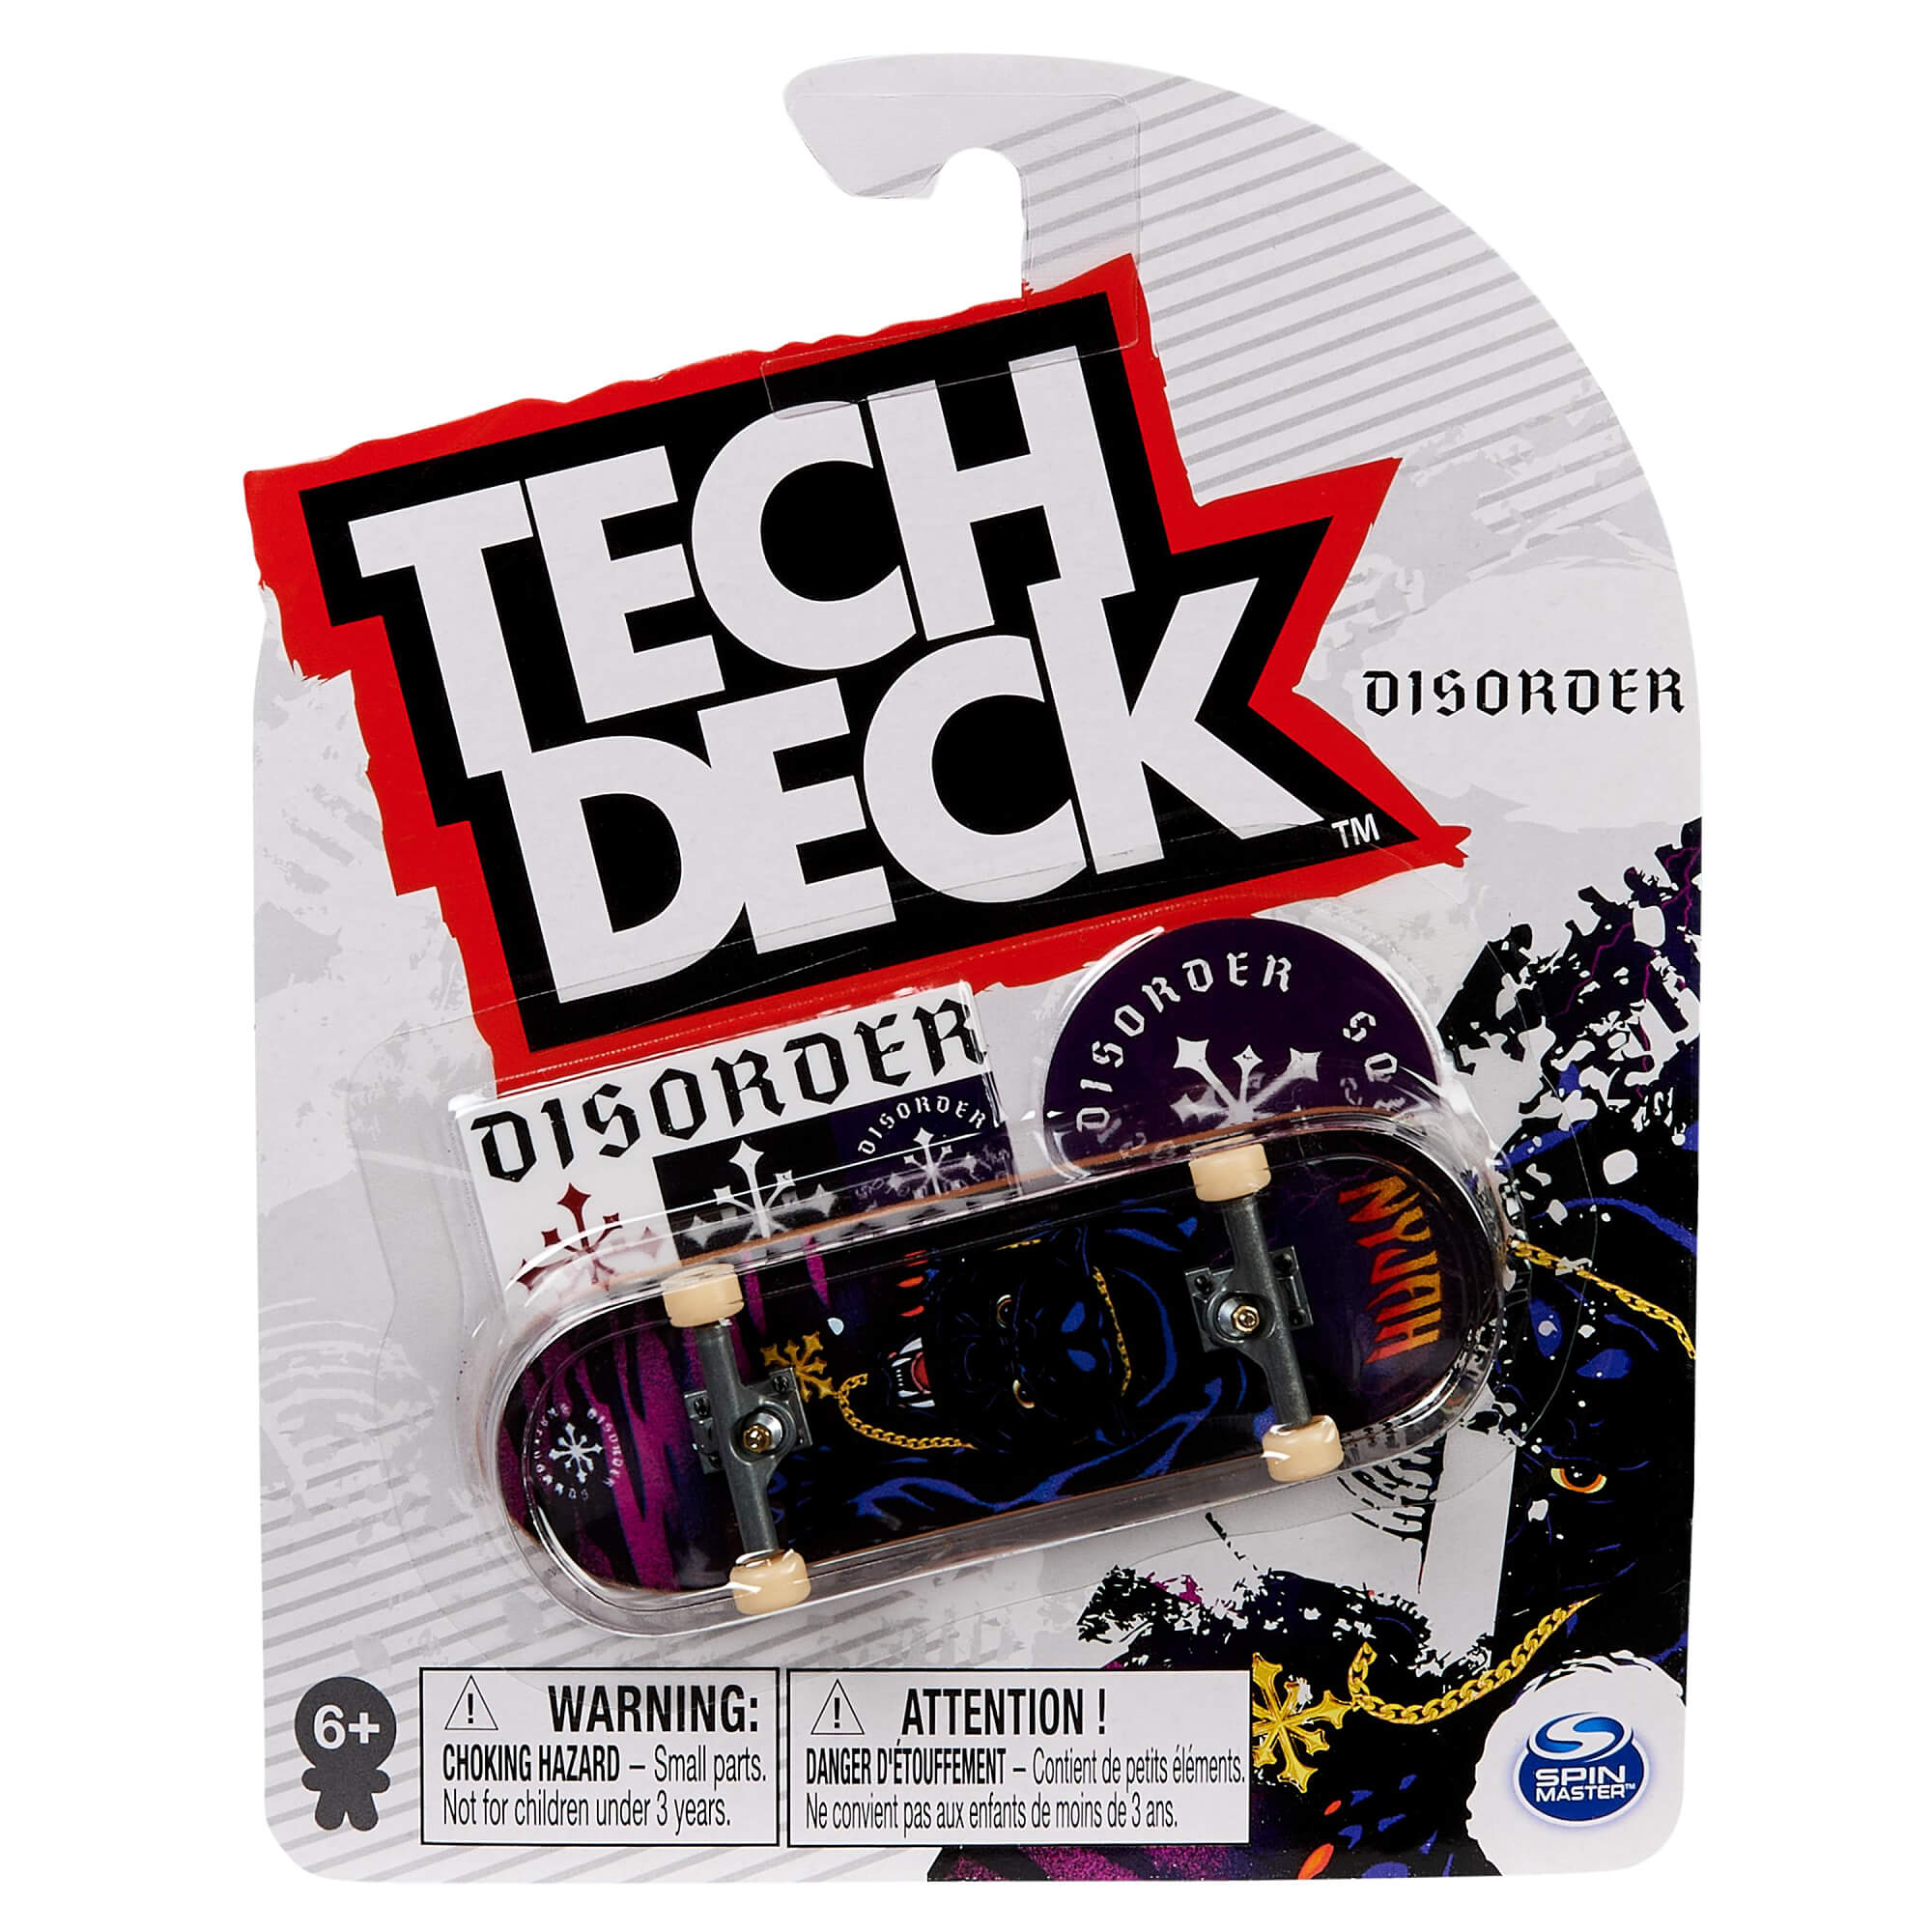 Tech Deck Fingerboard M46 Disorder Nyjah